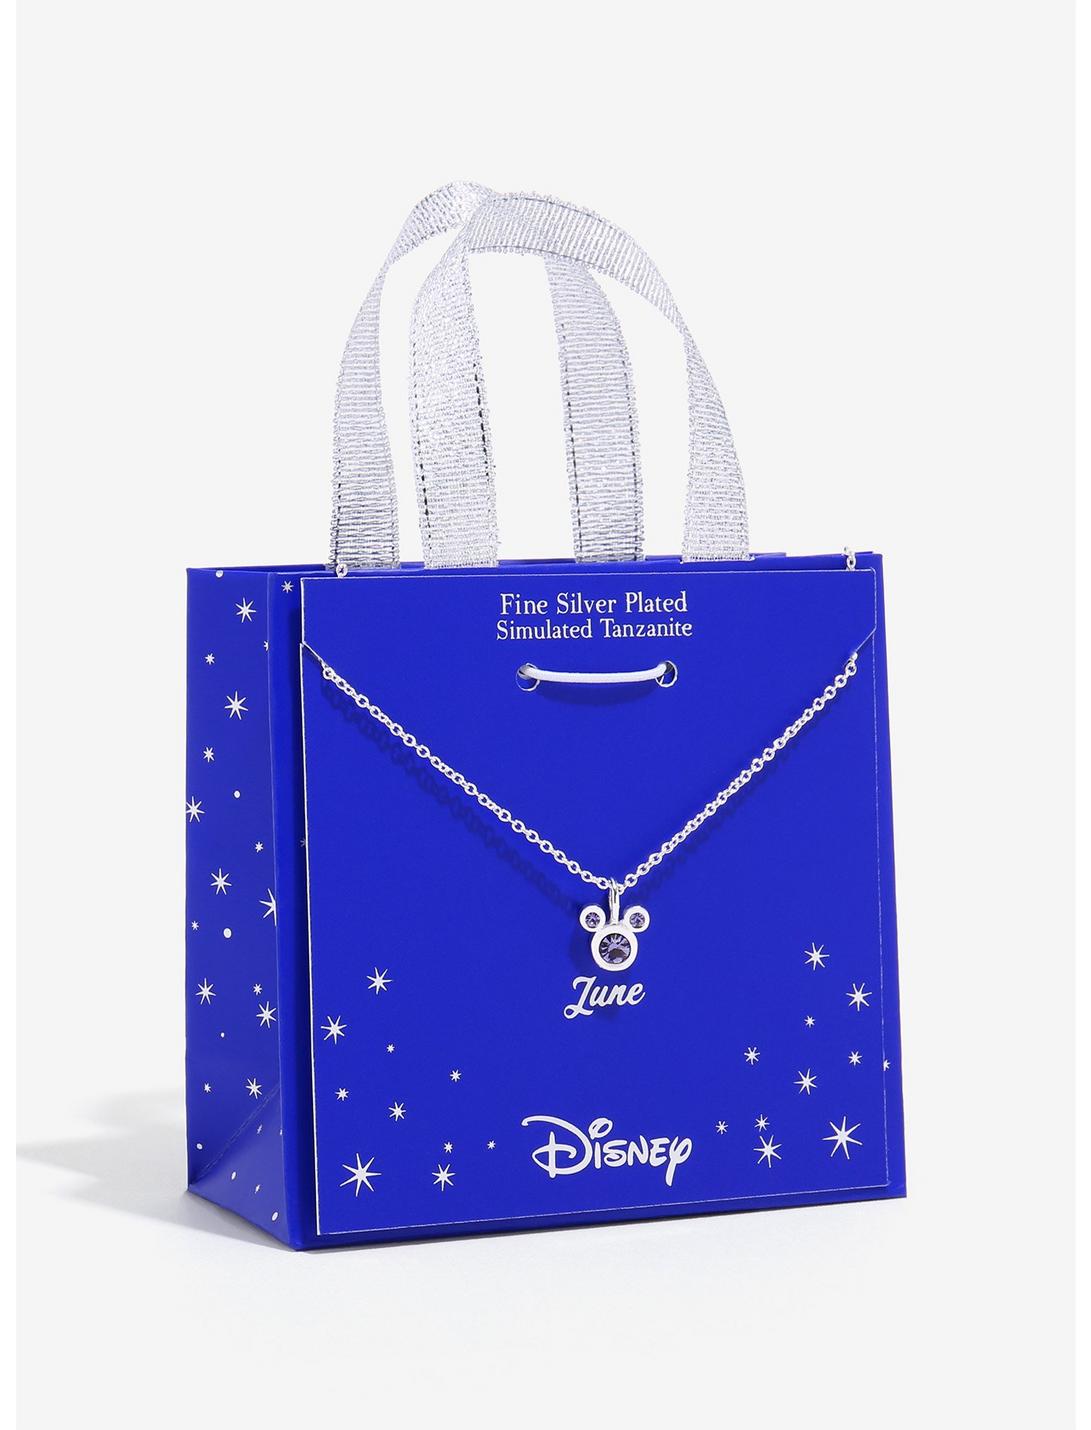 Disney Mickey Mouse June Tanzanite Birthstone Necklace, , hi-res